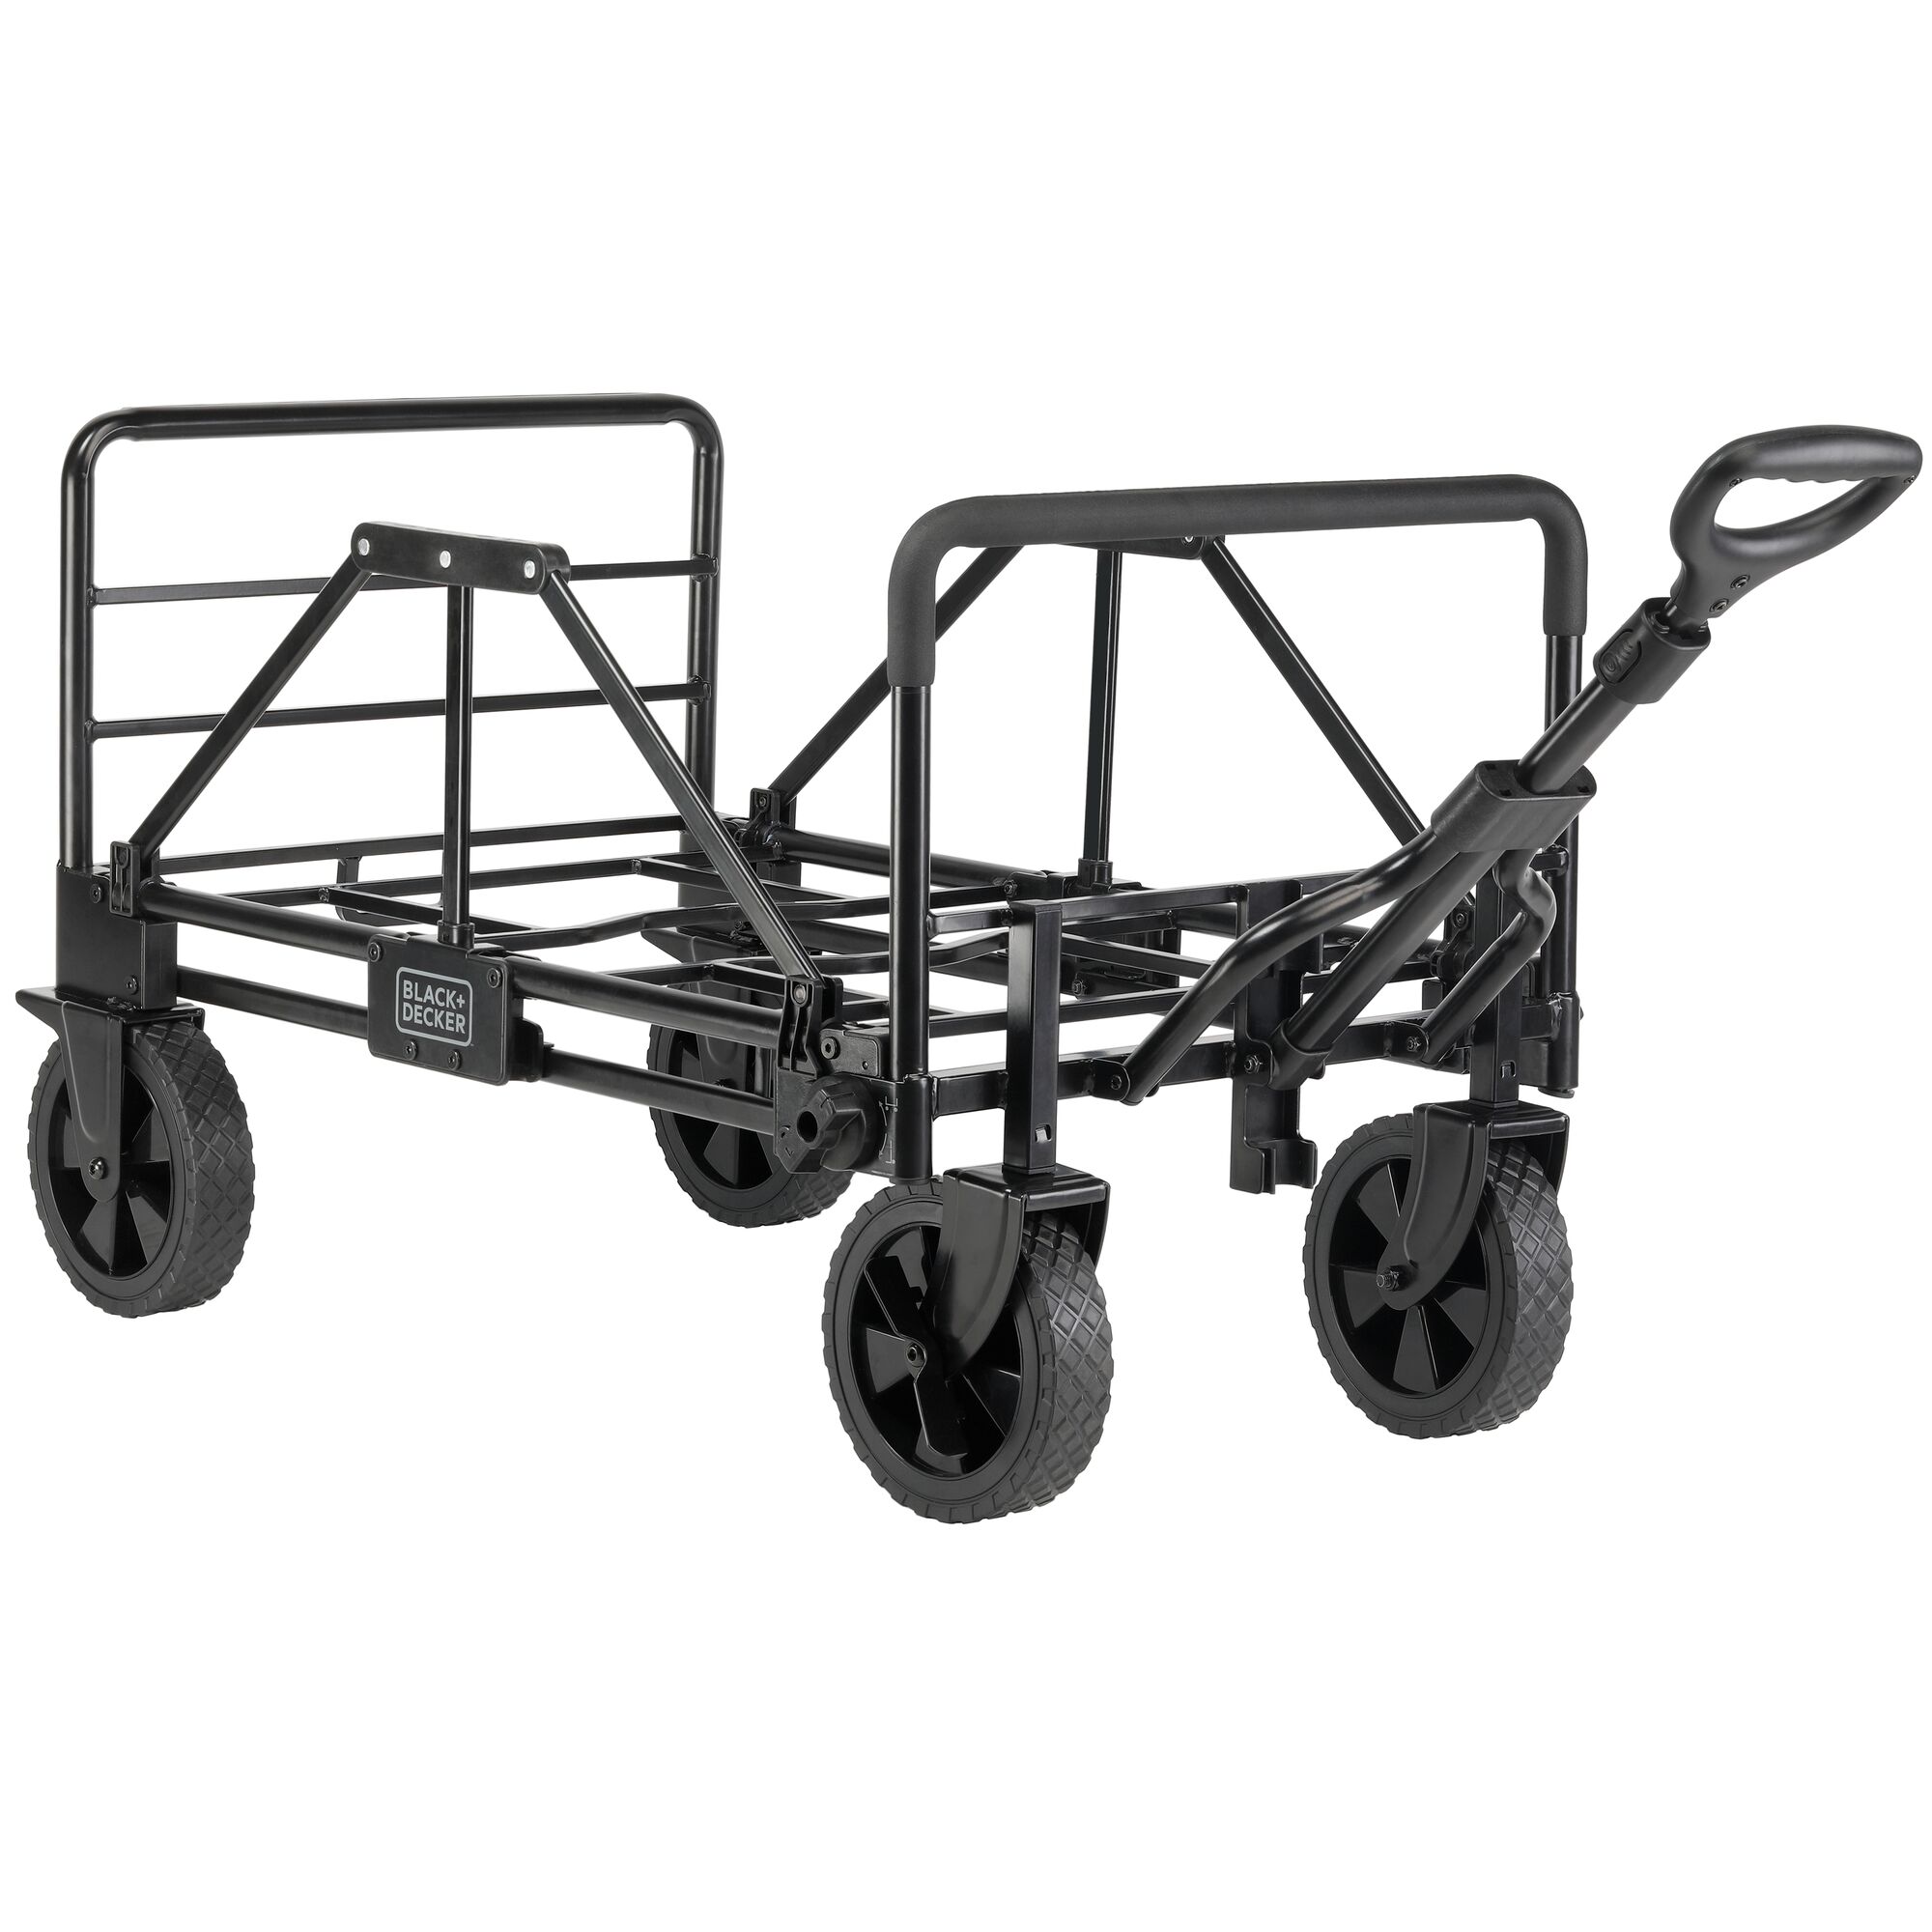 3in1 cart, wagon